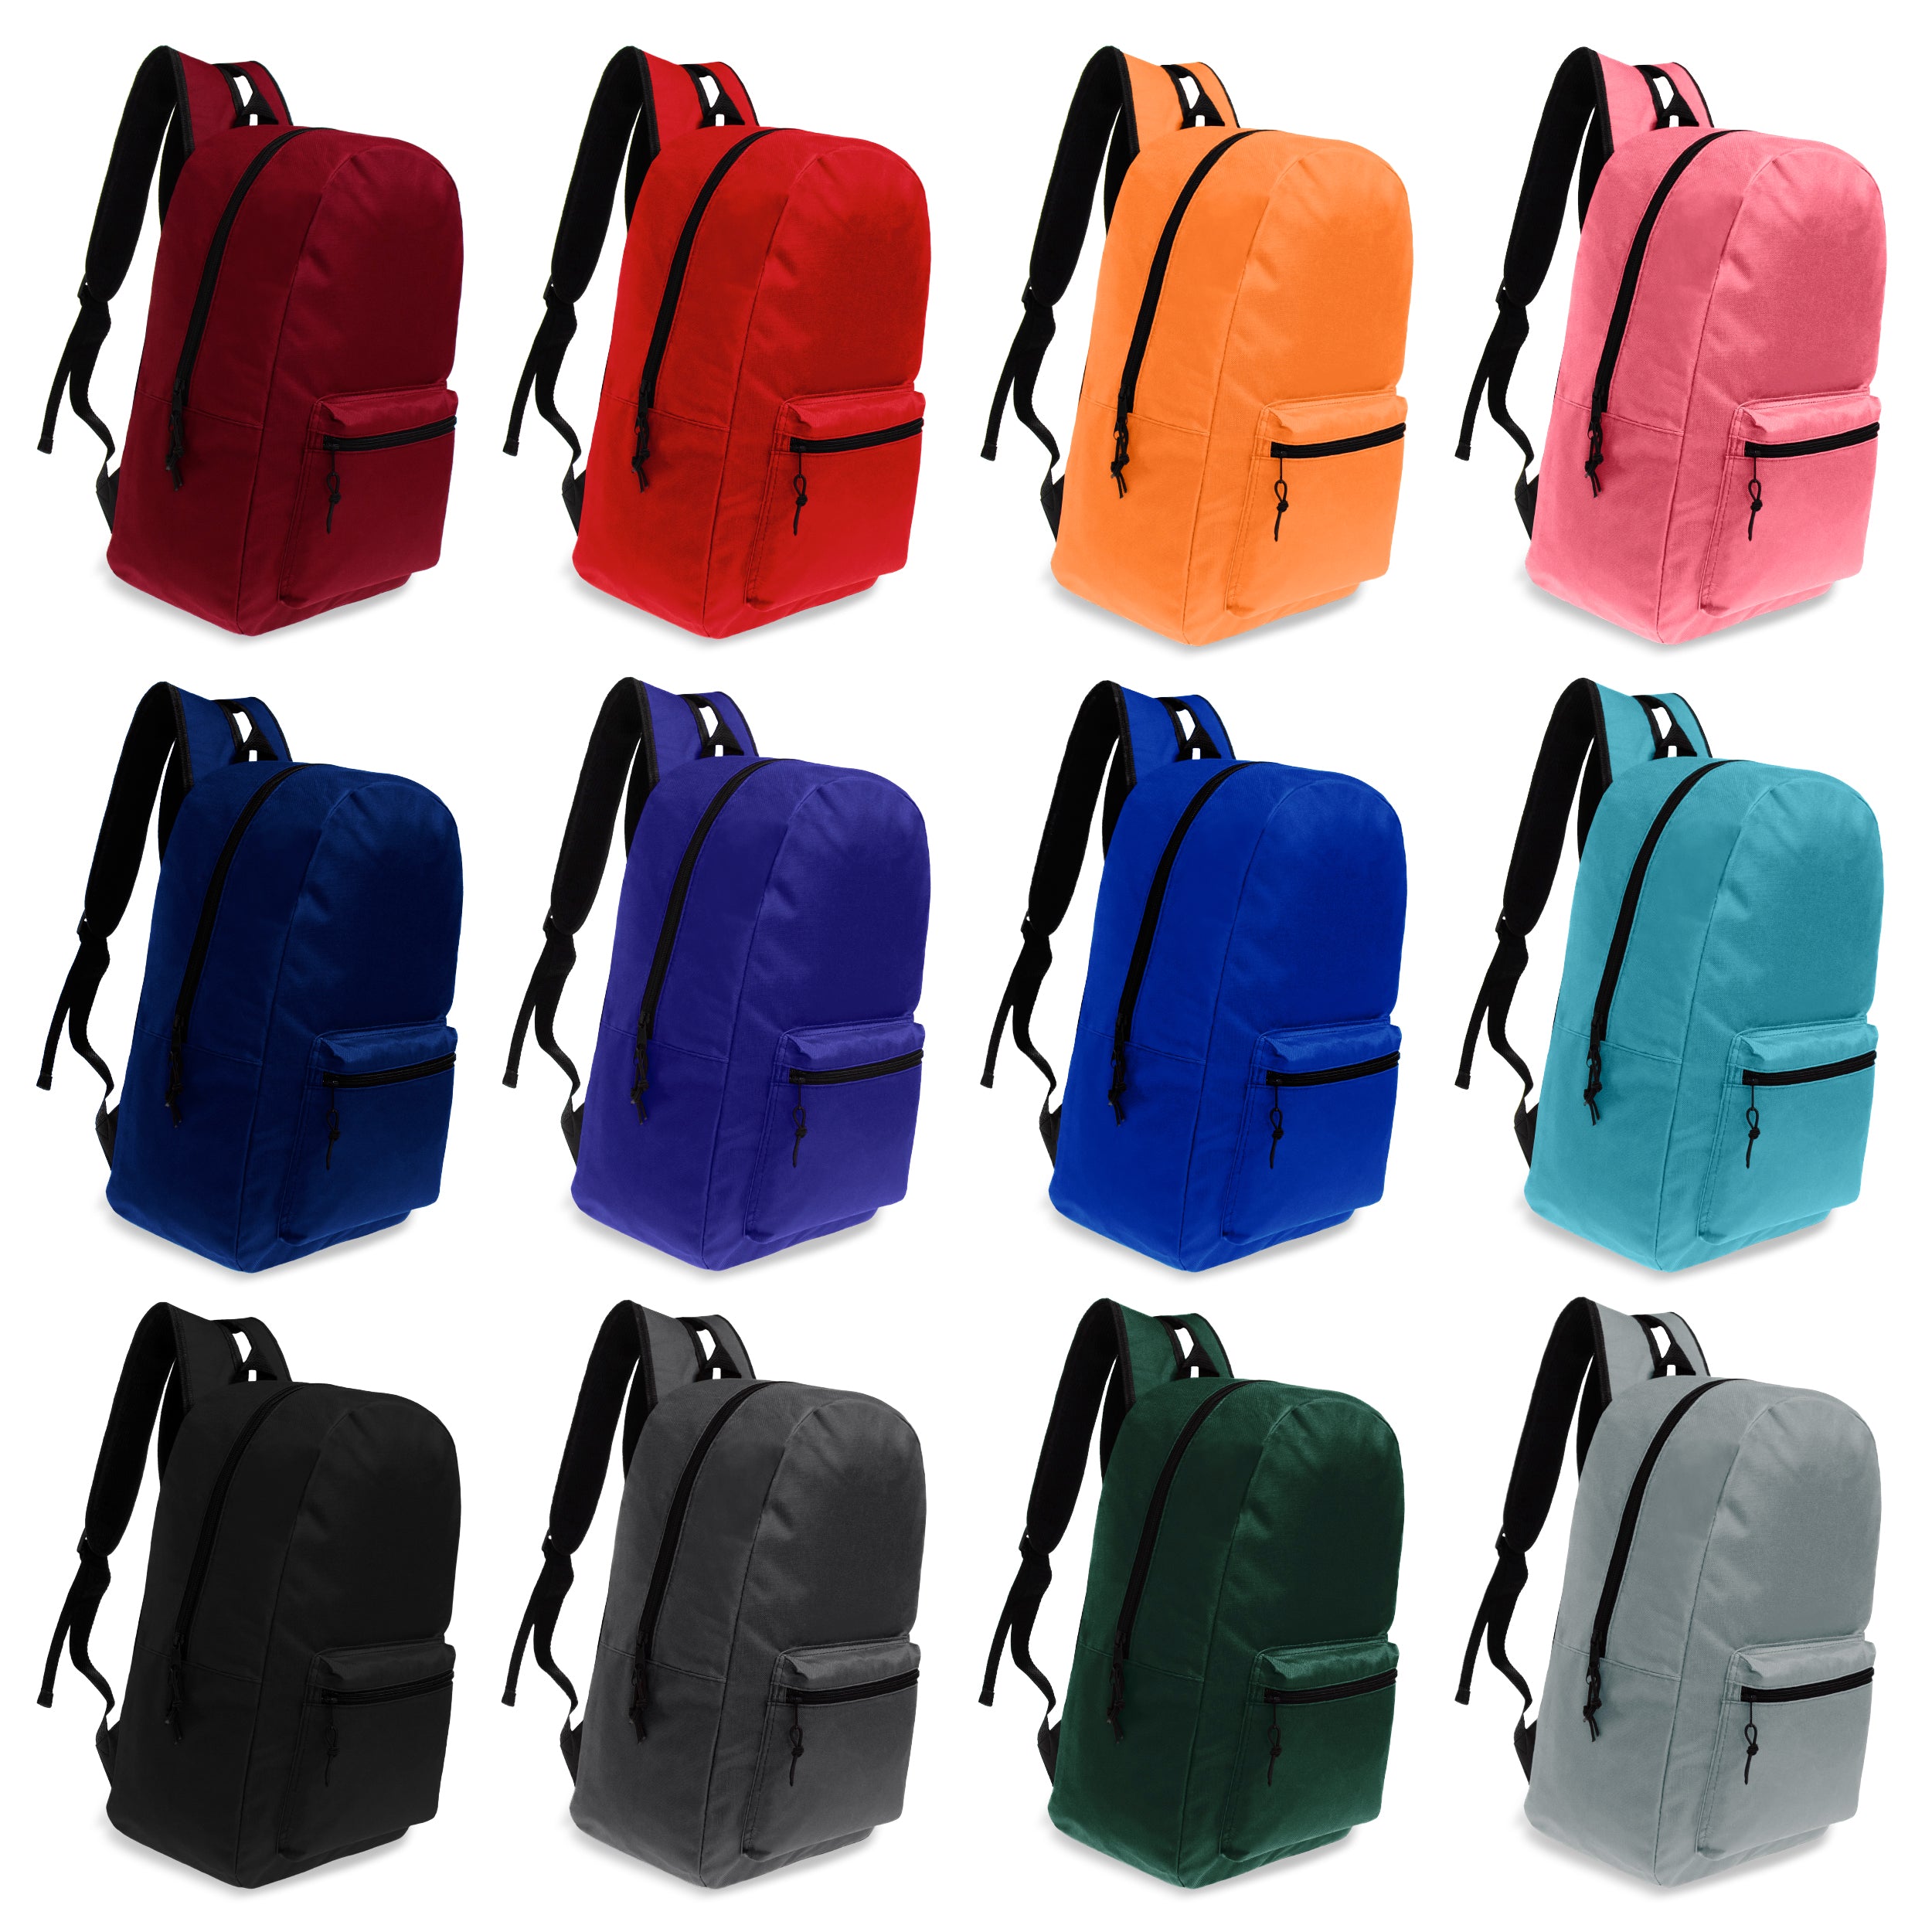 12 Pack Assorted Colors + School Backpacks Wholesale School Supplies Kit Case Of 12